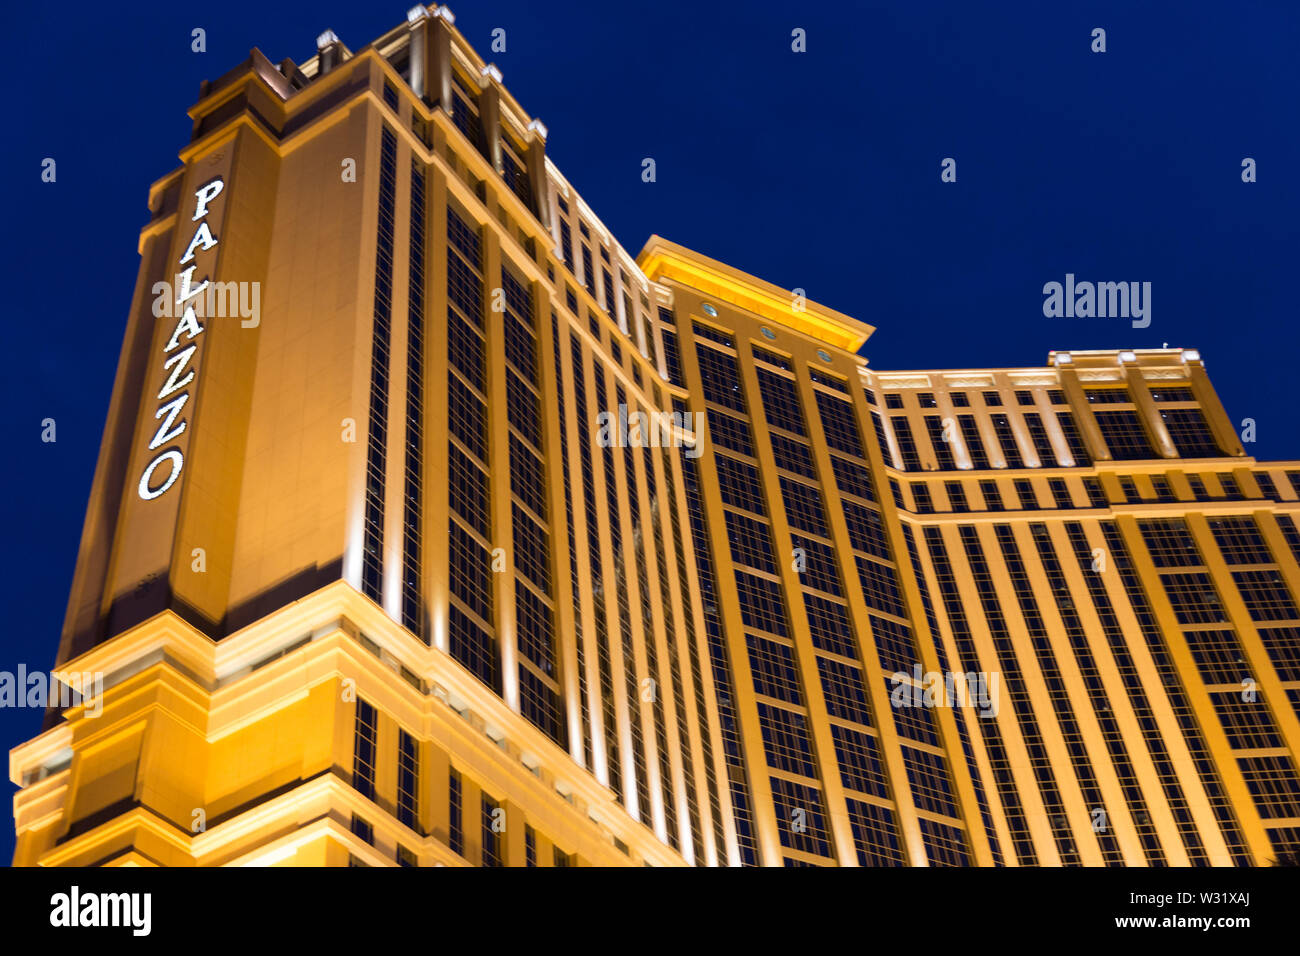 LAS VEGAS - MAY 29, 2015: The Palazzo luxury hotel and casino resort located on the Strip in Las Vegas, Nevada. Stock Photo